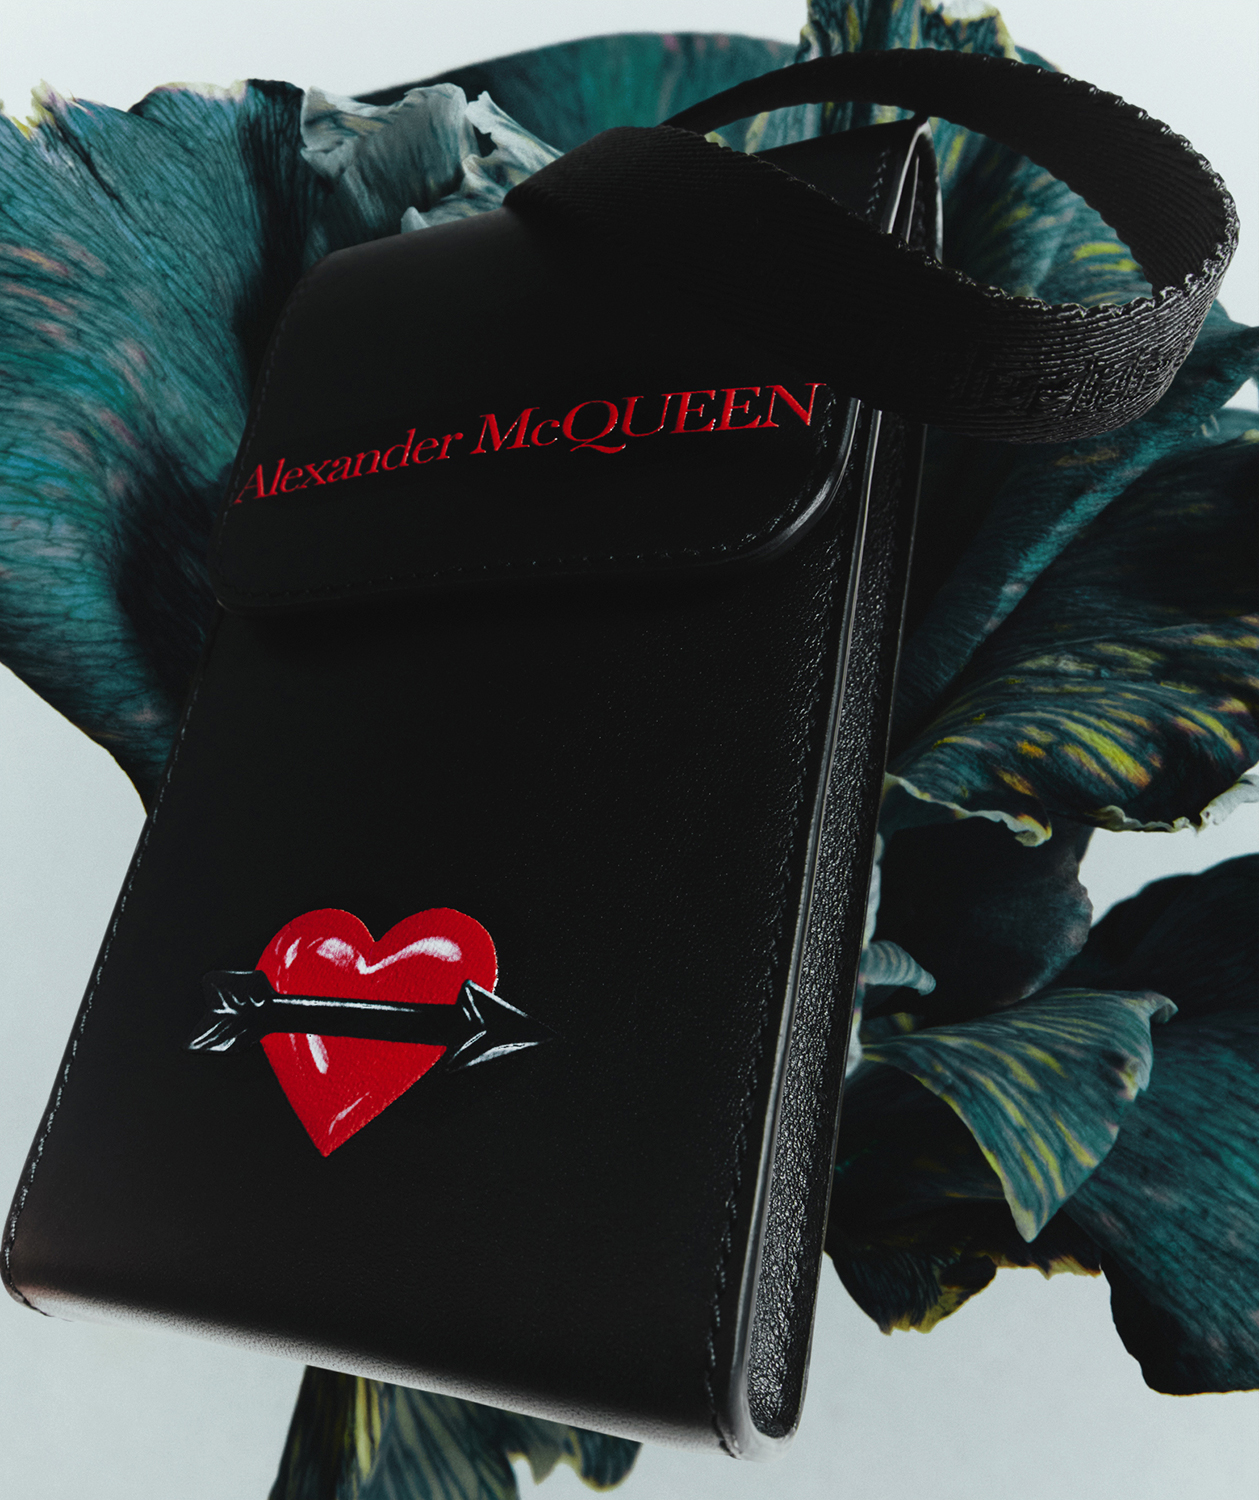 Alexander McQueenからバレンタインデーを記念したカプセル 